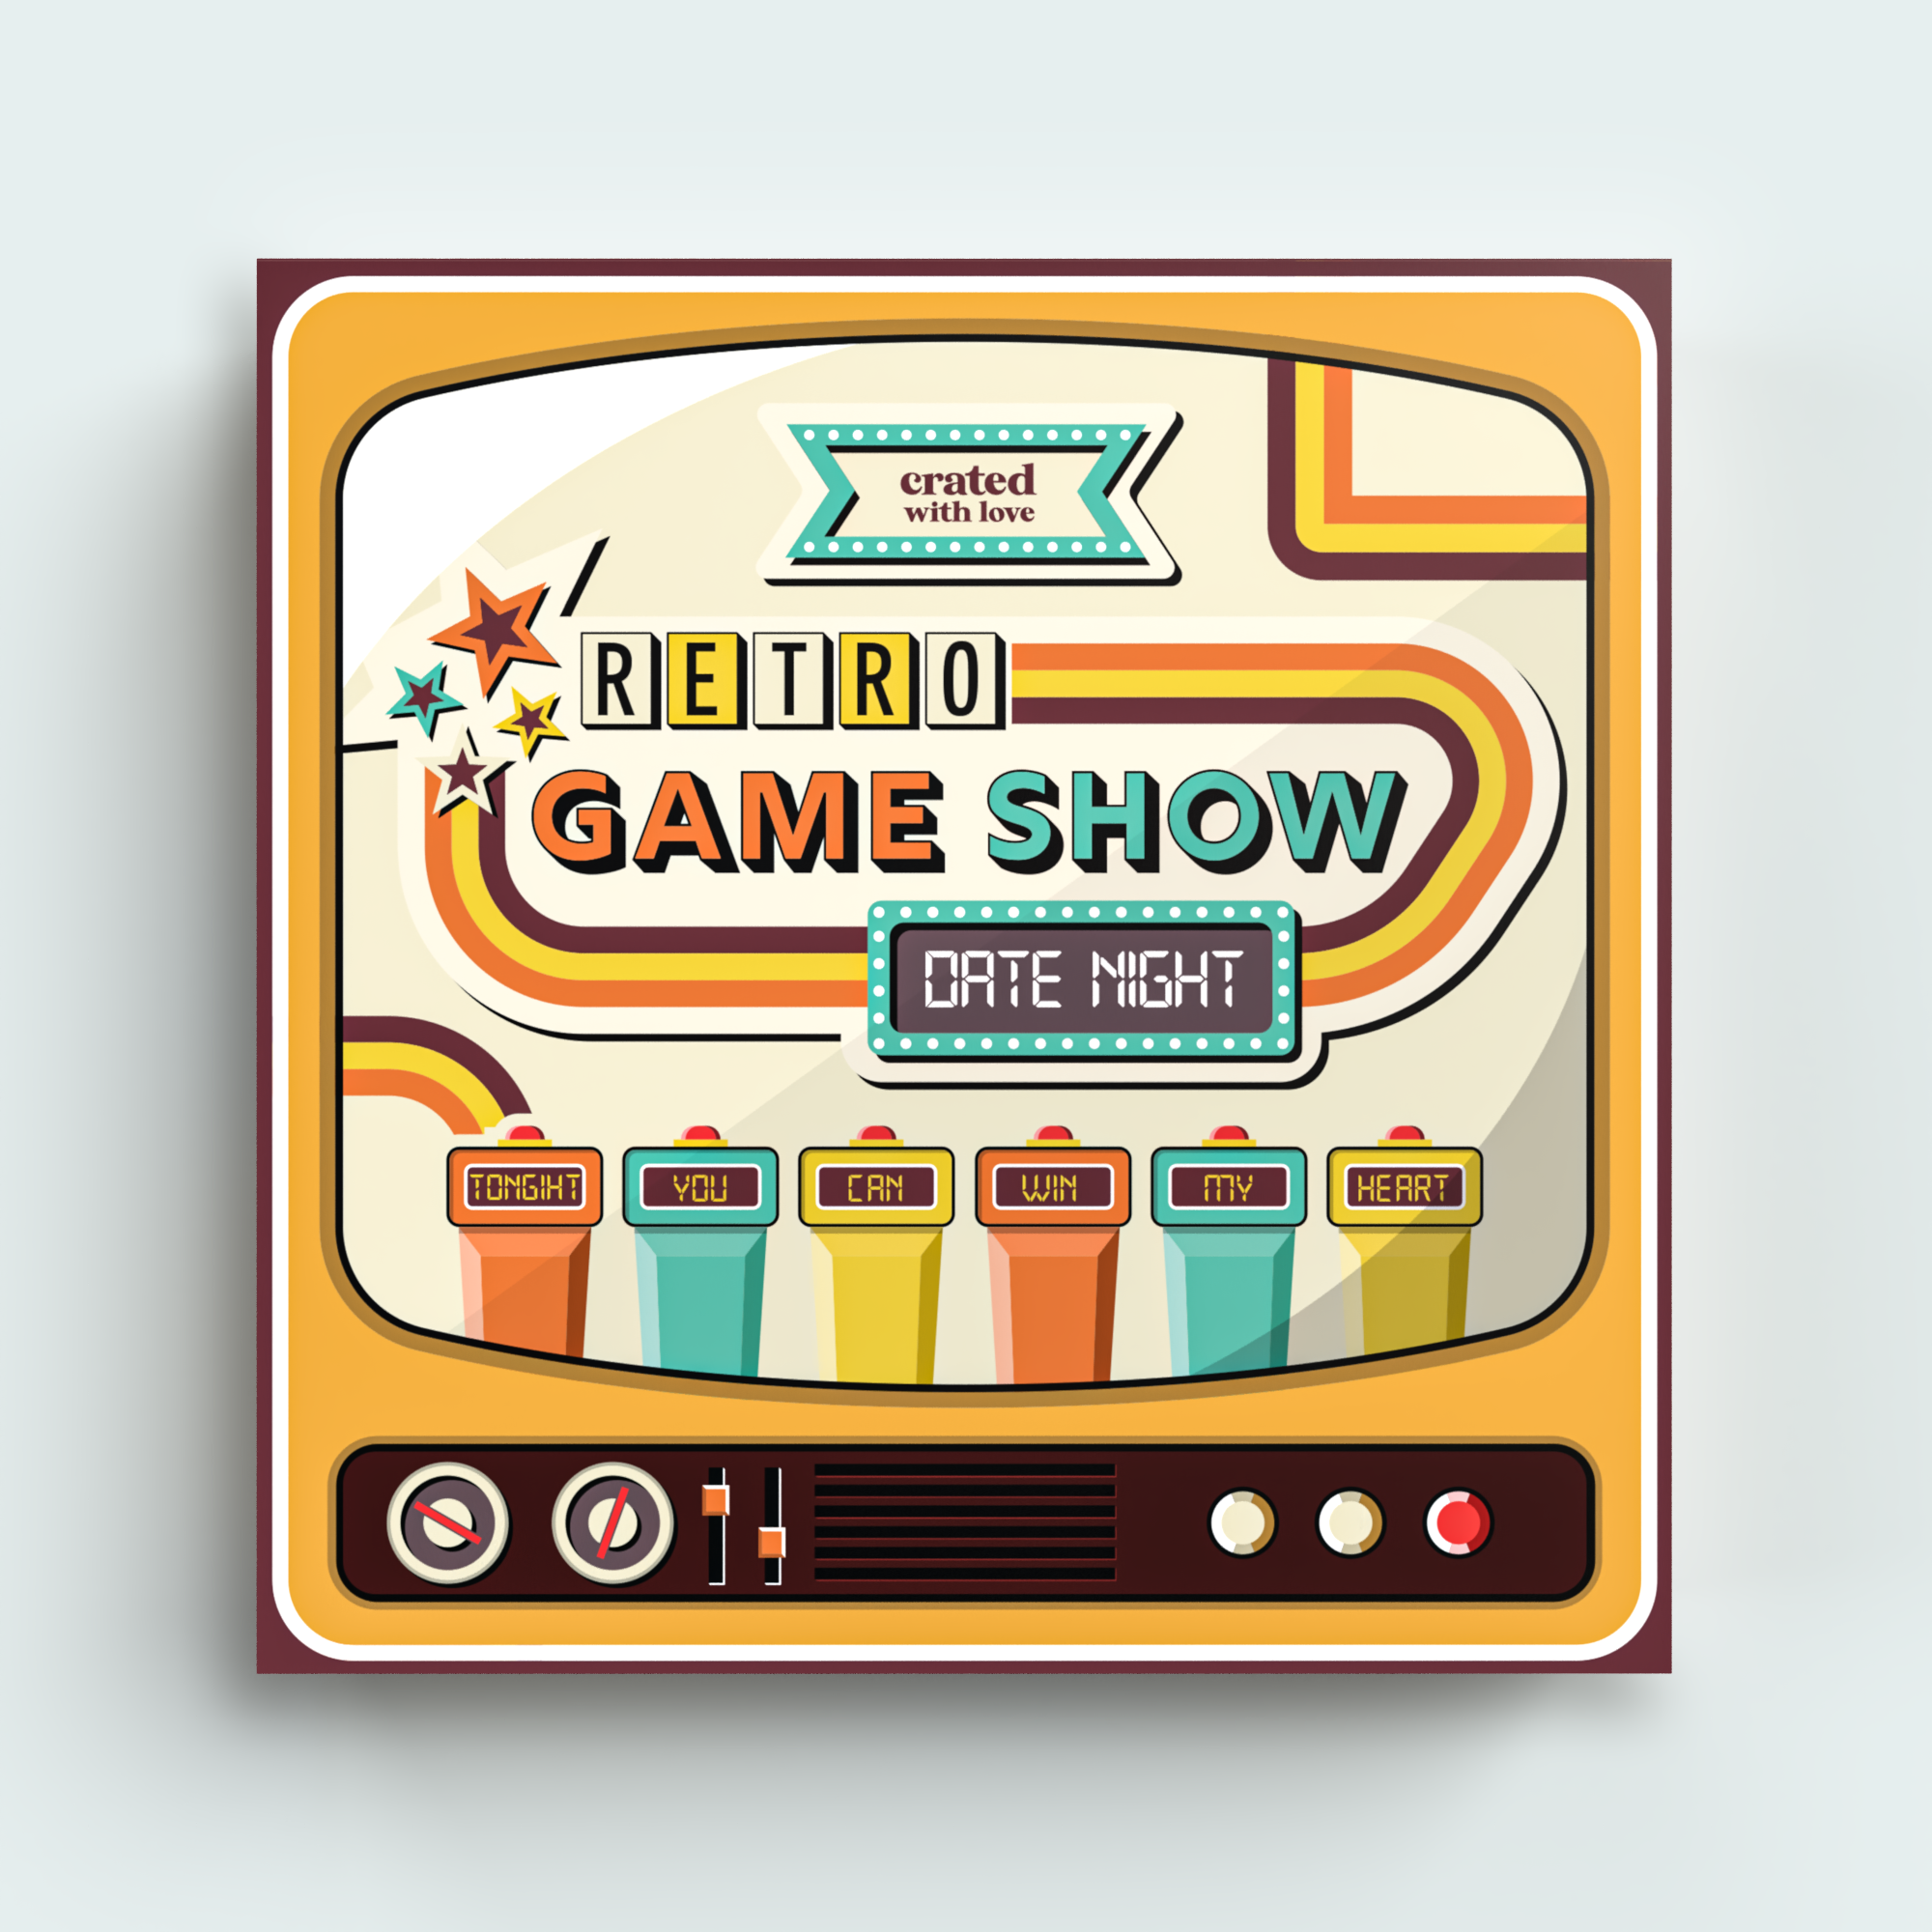 Retro Game Show Date Night Box